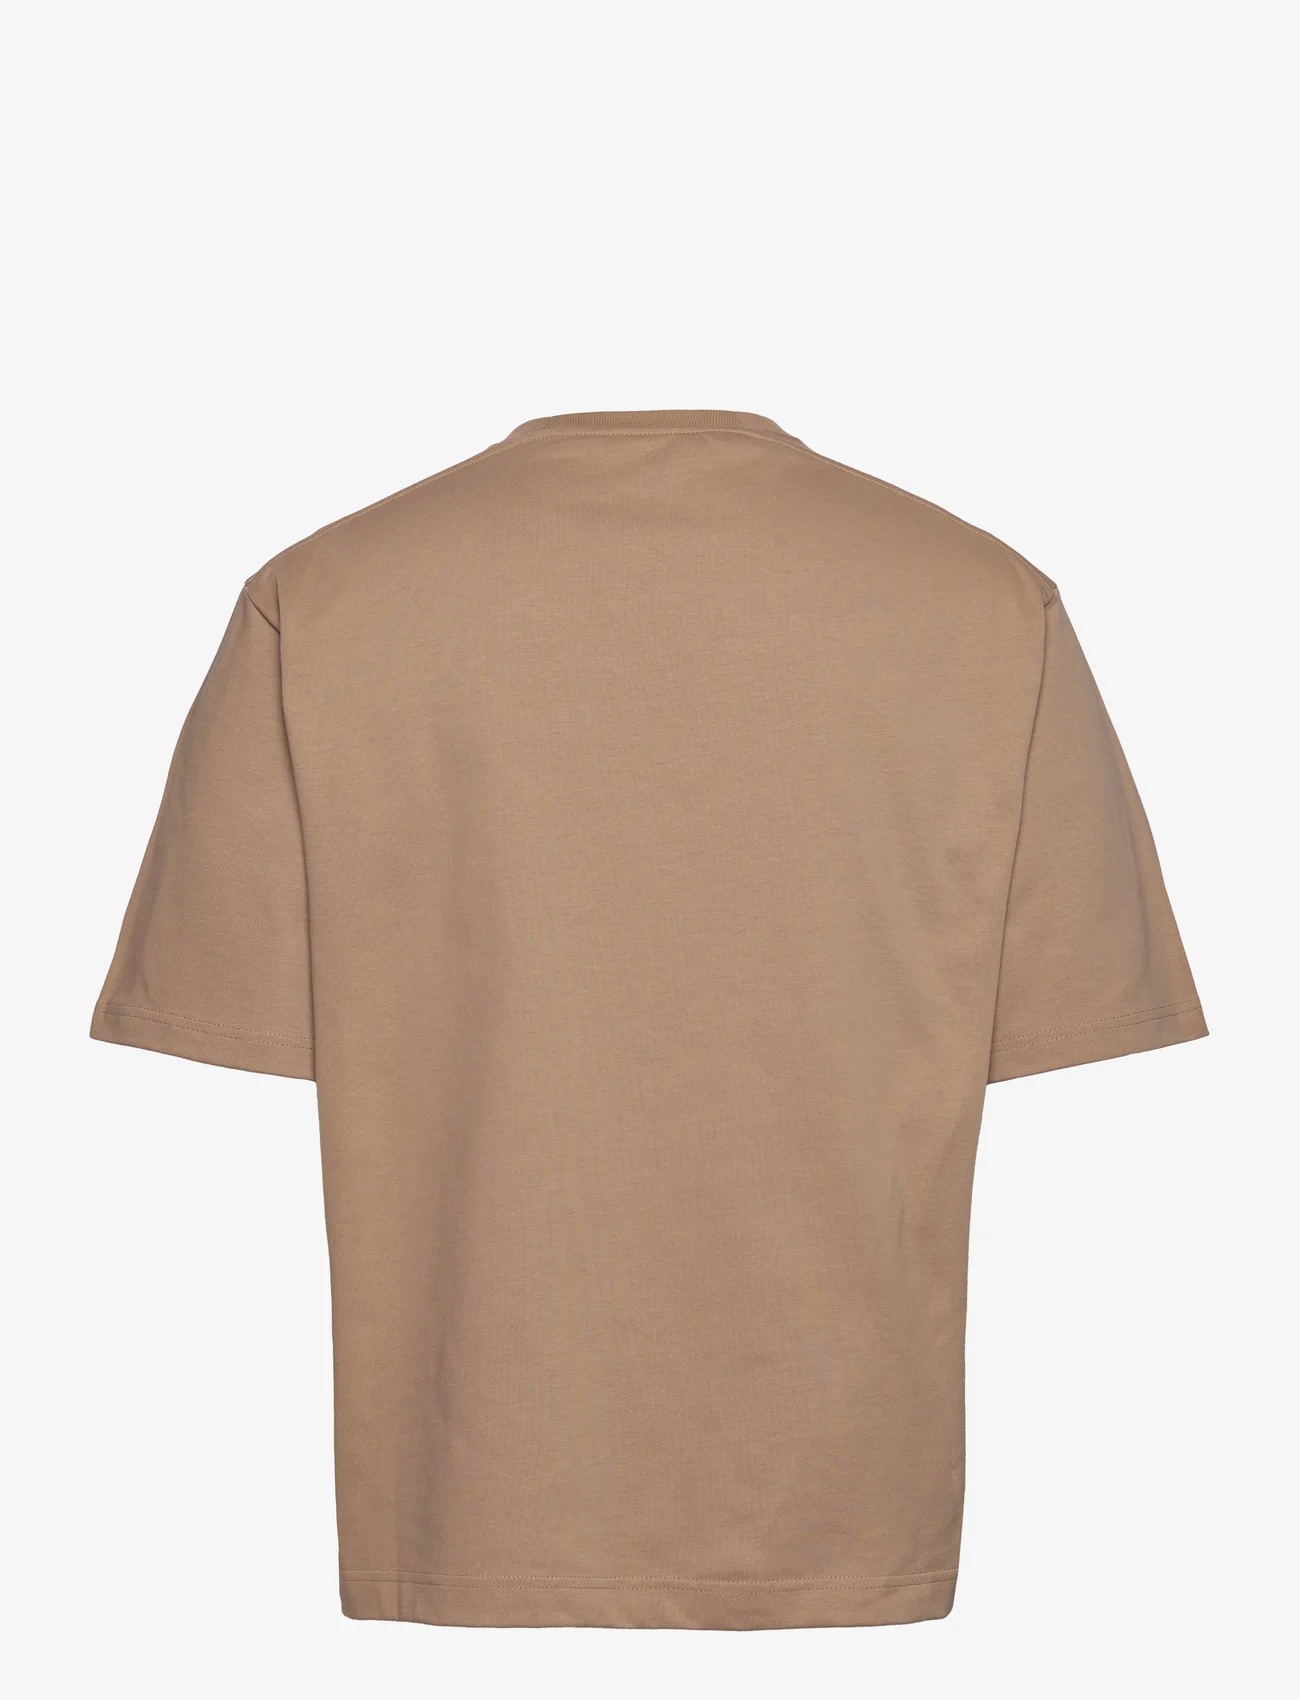 HOLZWEILER - Ranger Stamp Tee - basic t-shirts - brown - 1